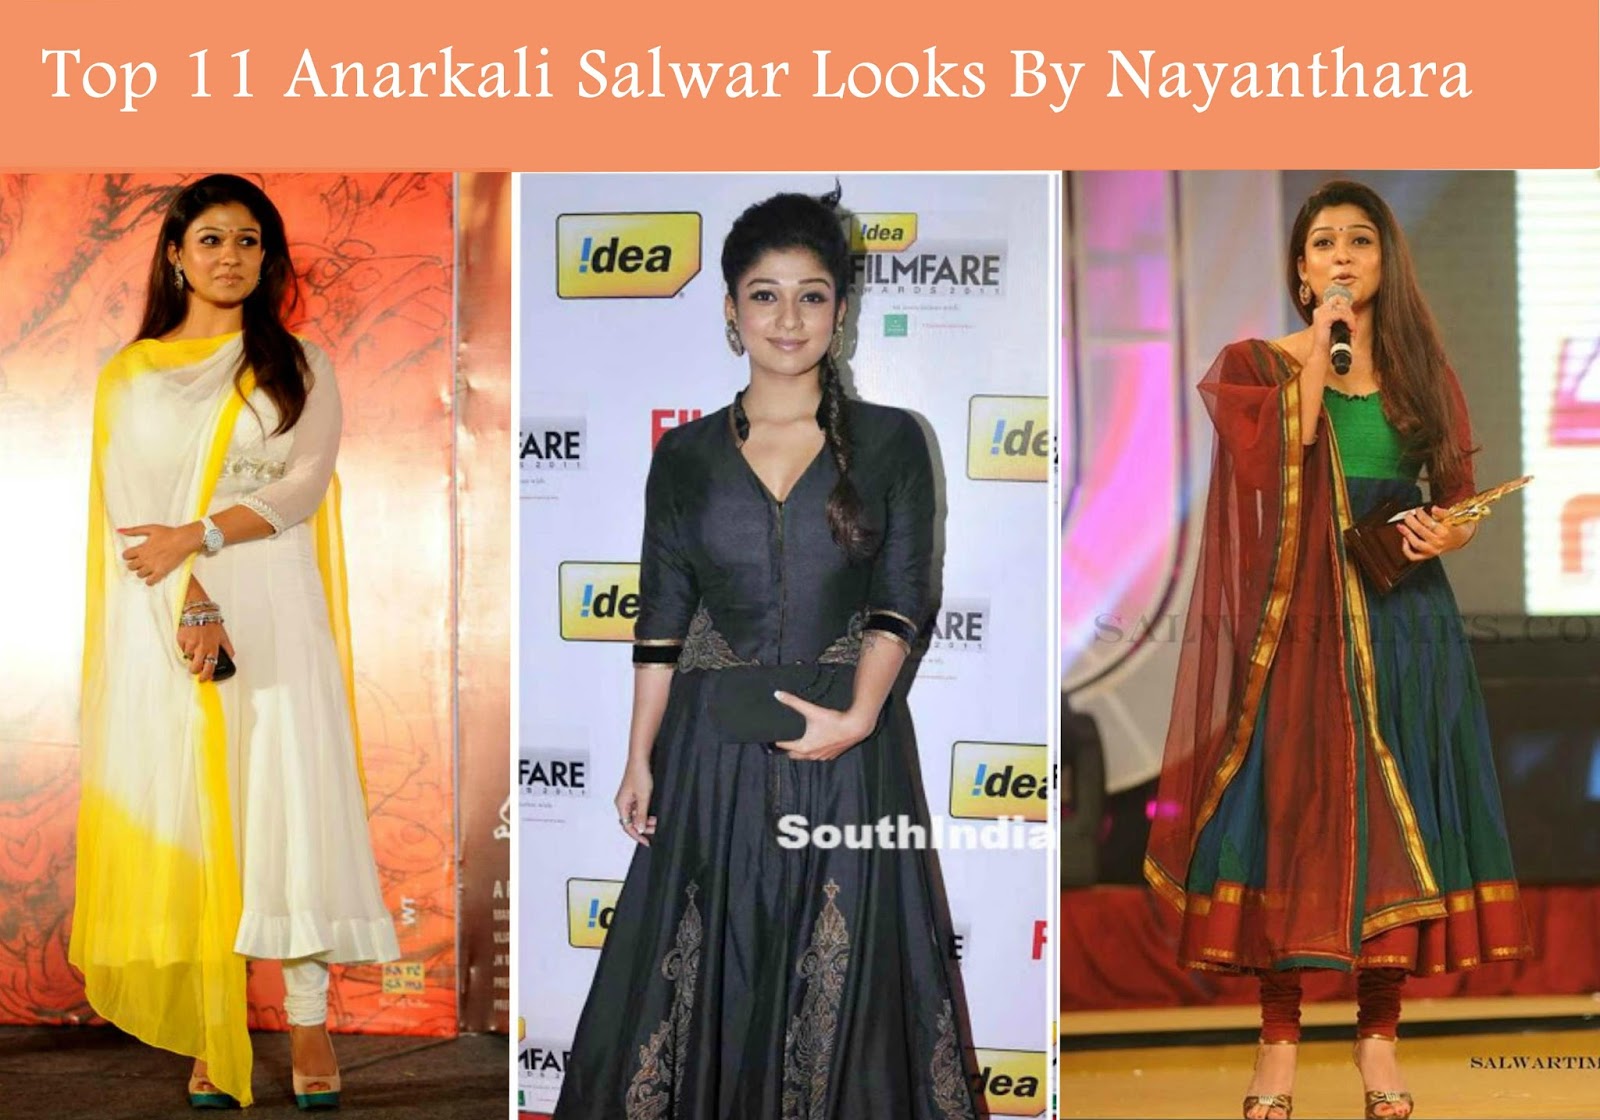 Top 11 Anarkali Looks by Nayanthara